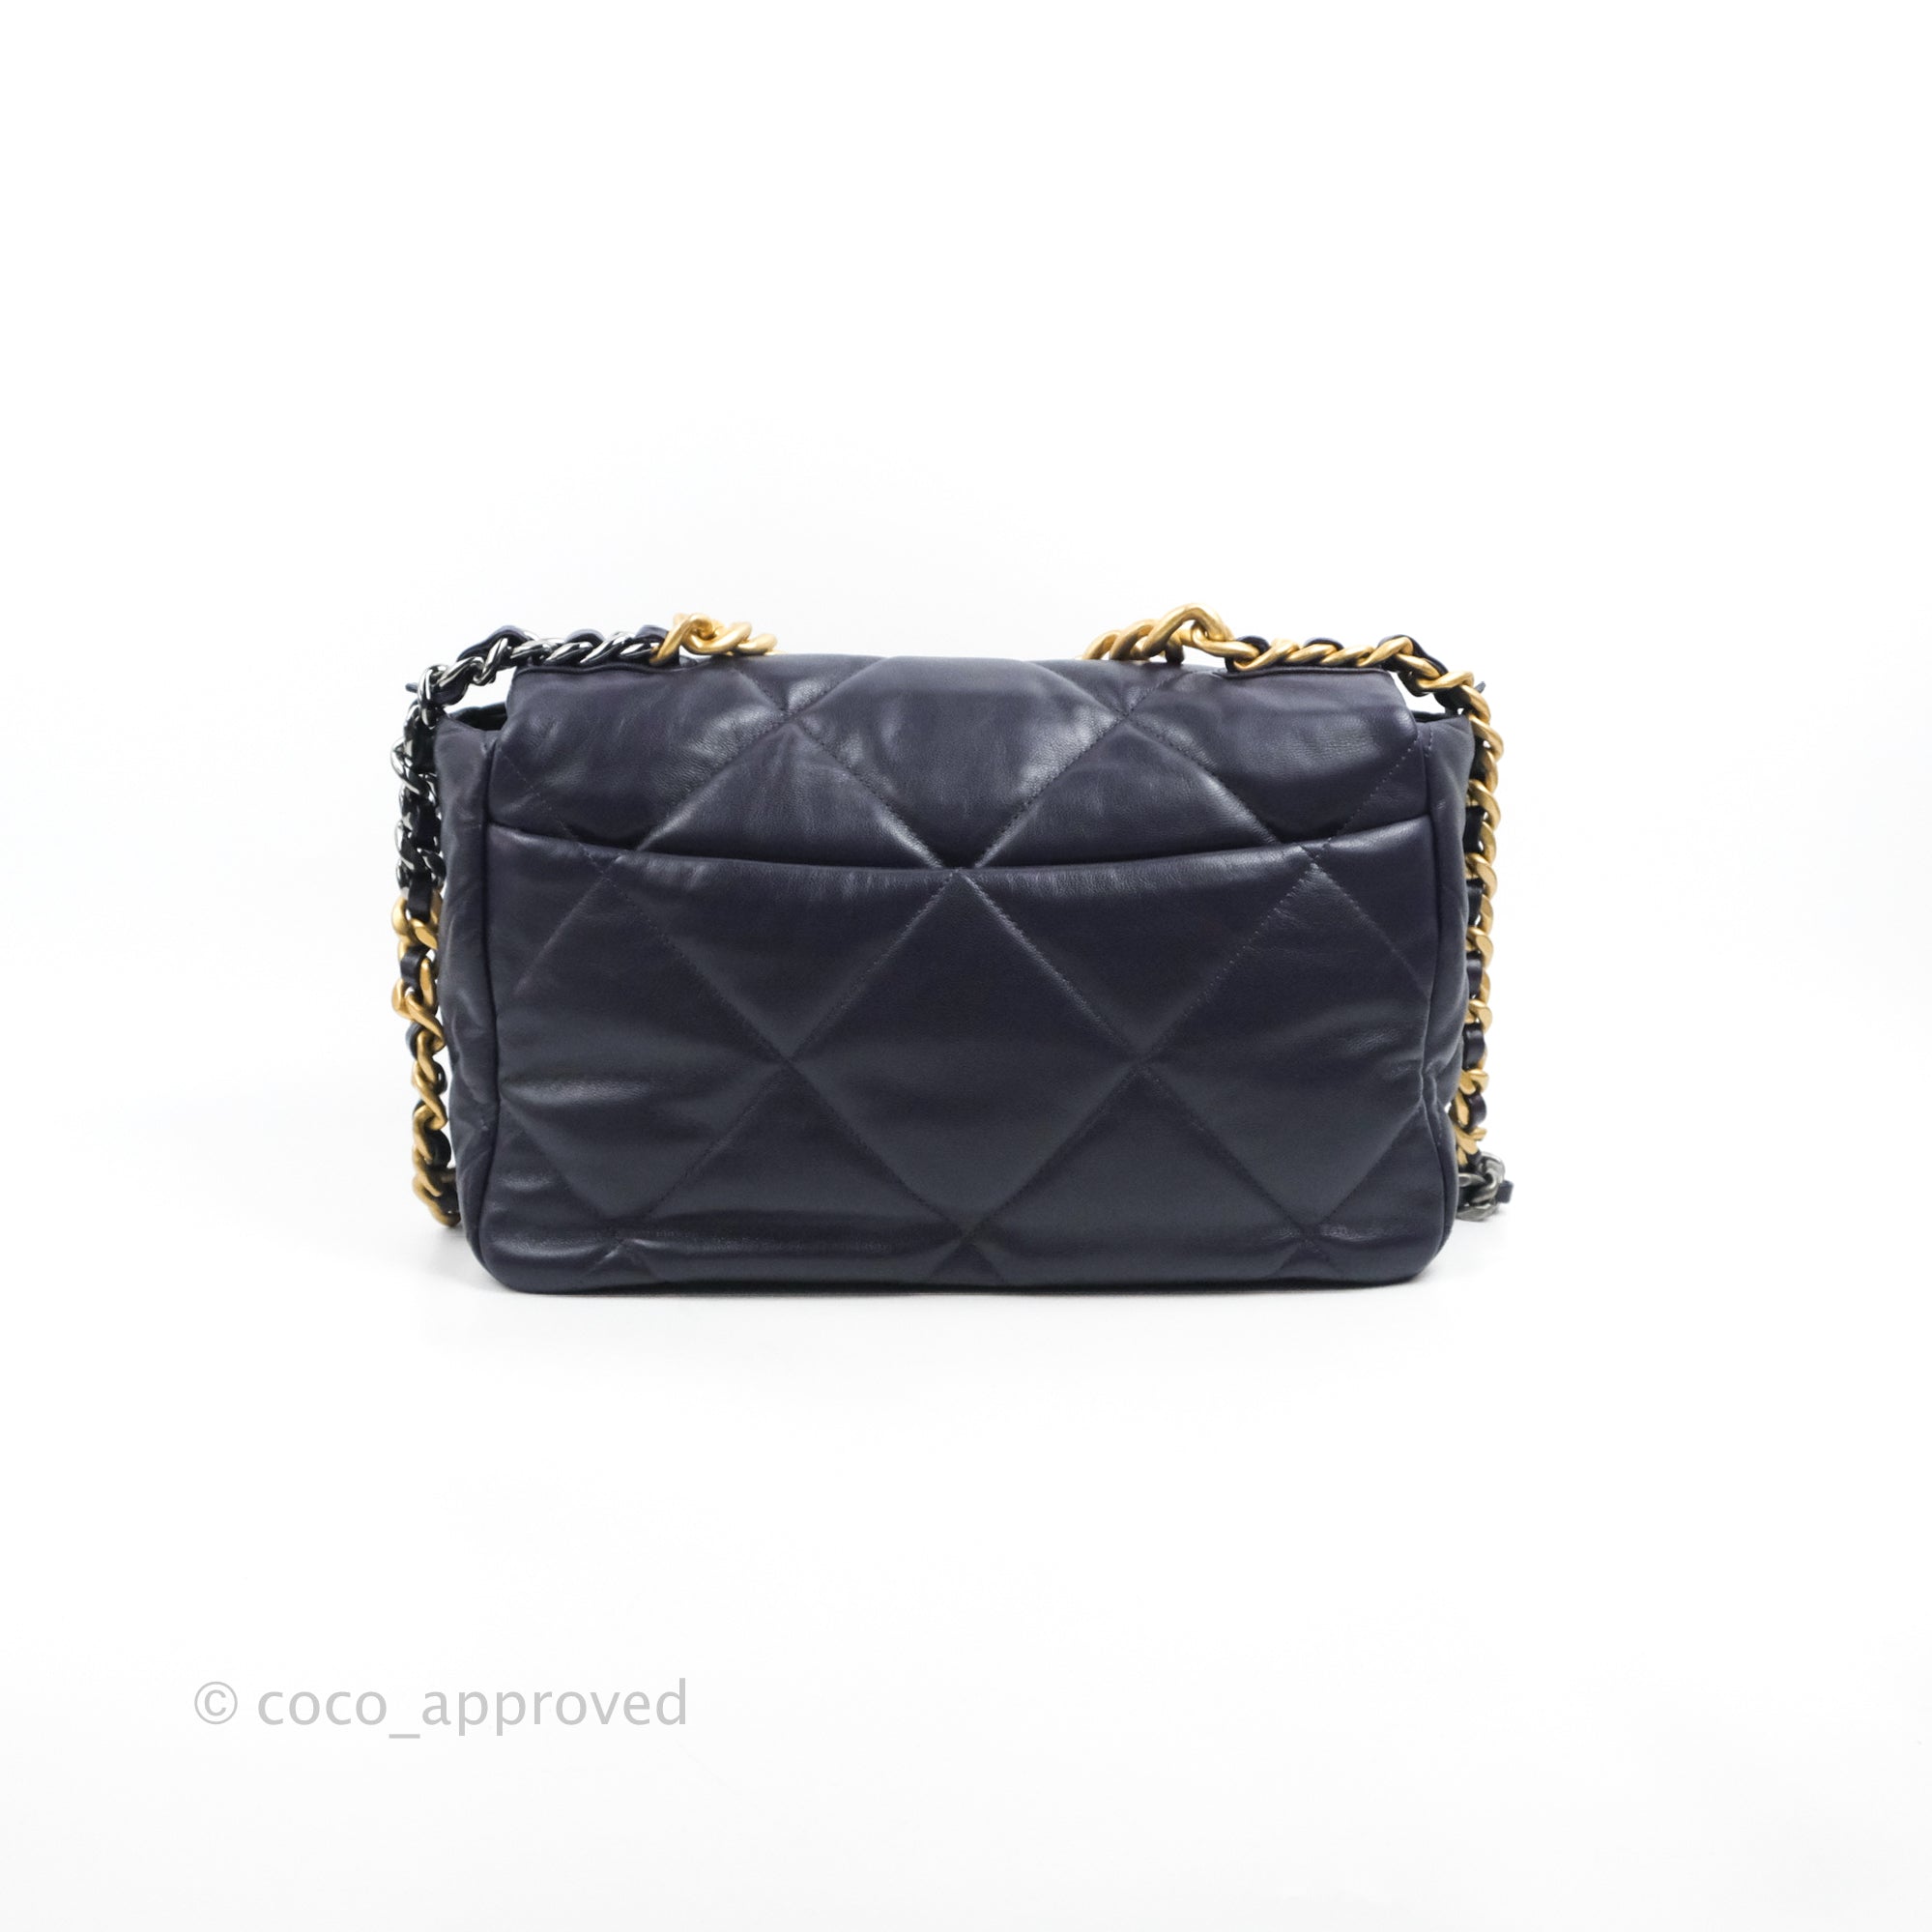 Chanel 19 Medium Crochet Flap Bag